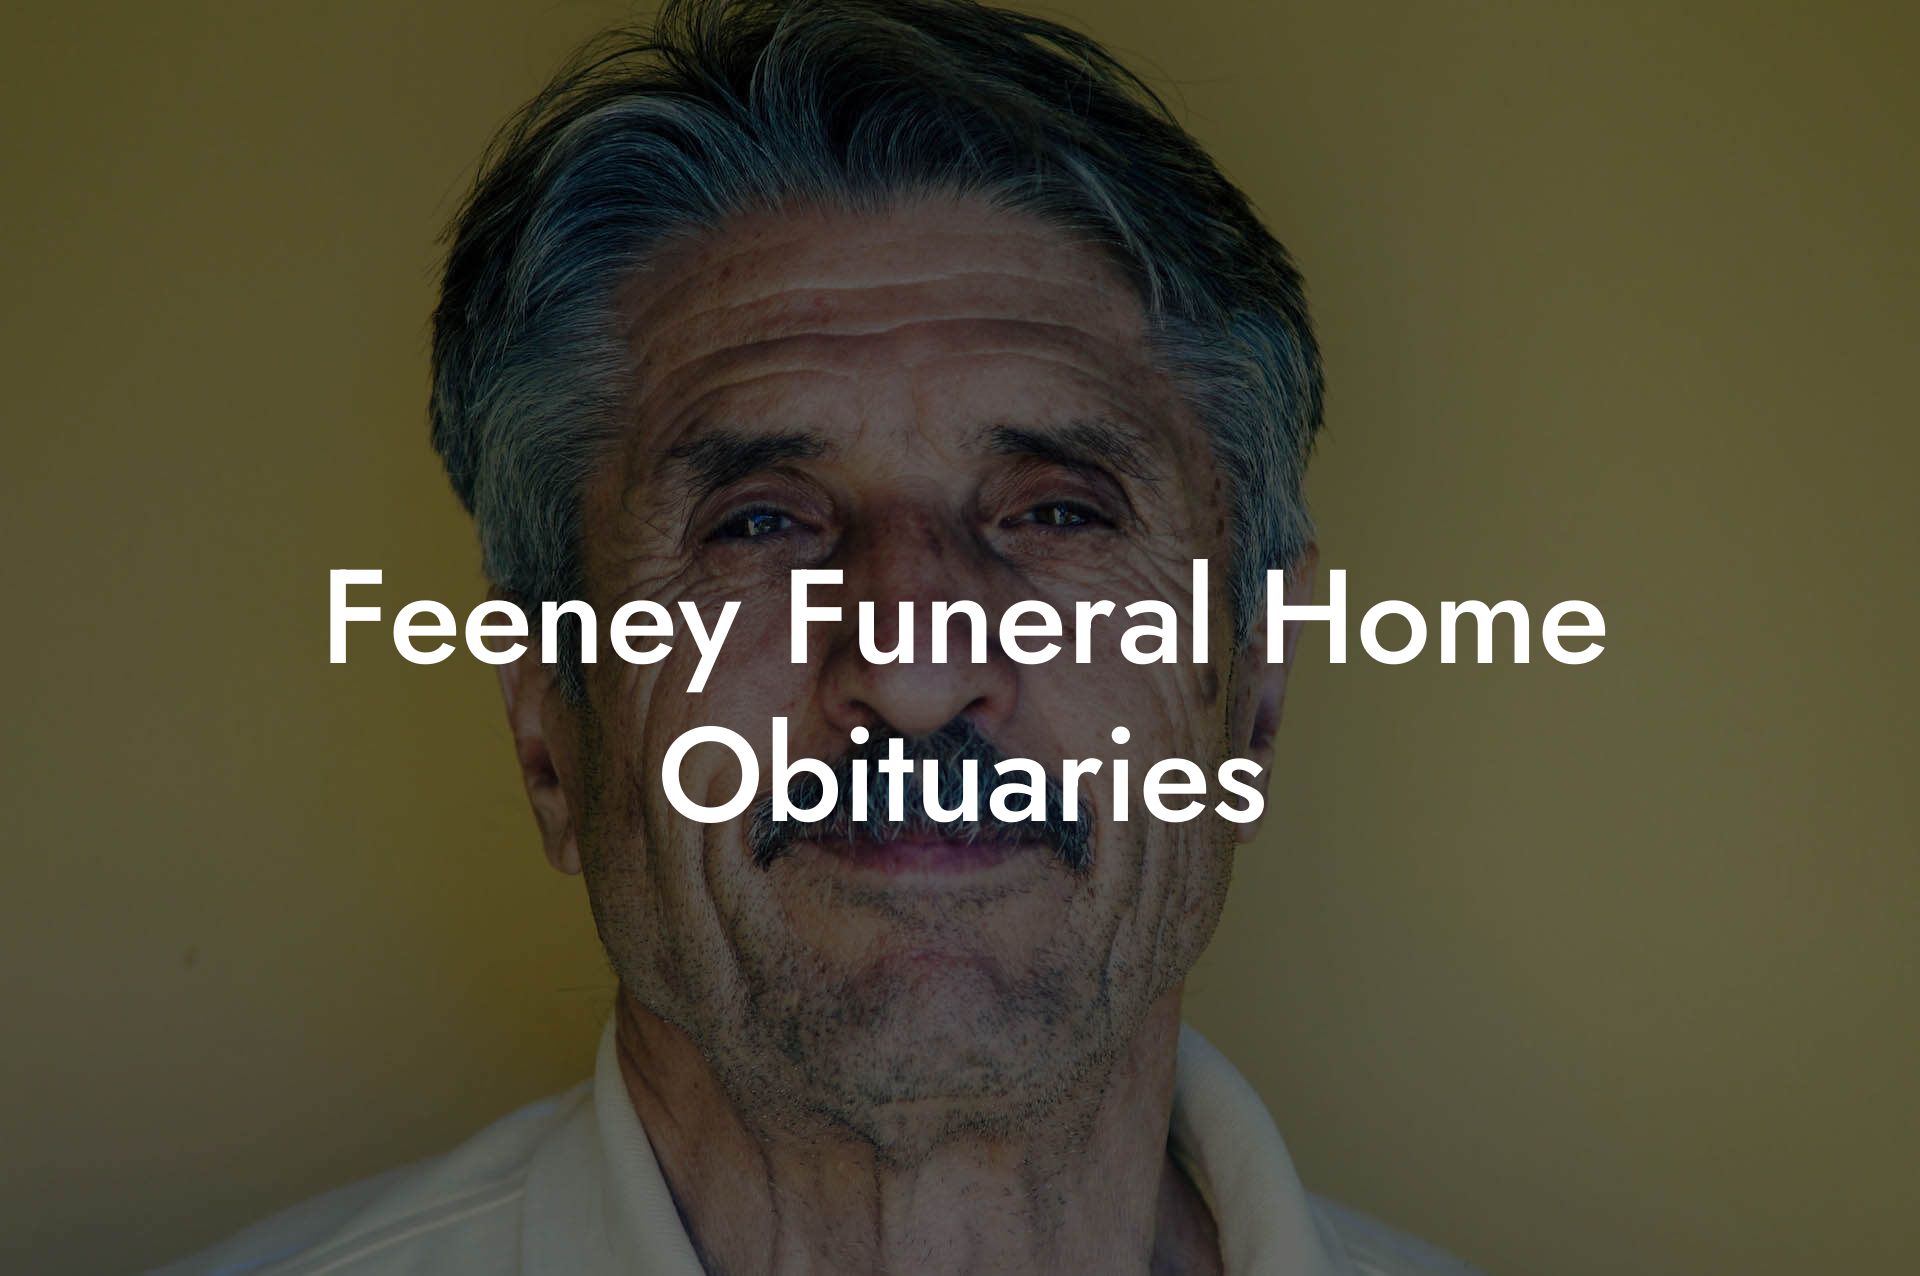 Feeney Funeral Home Obituaries